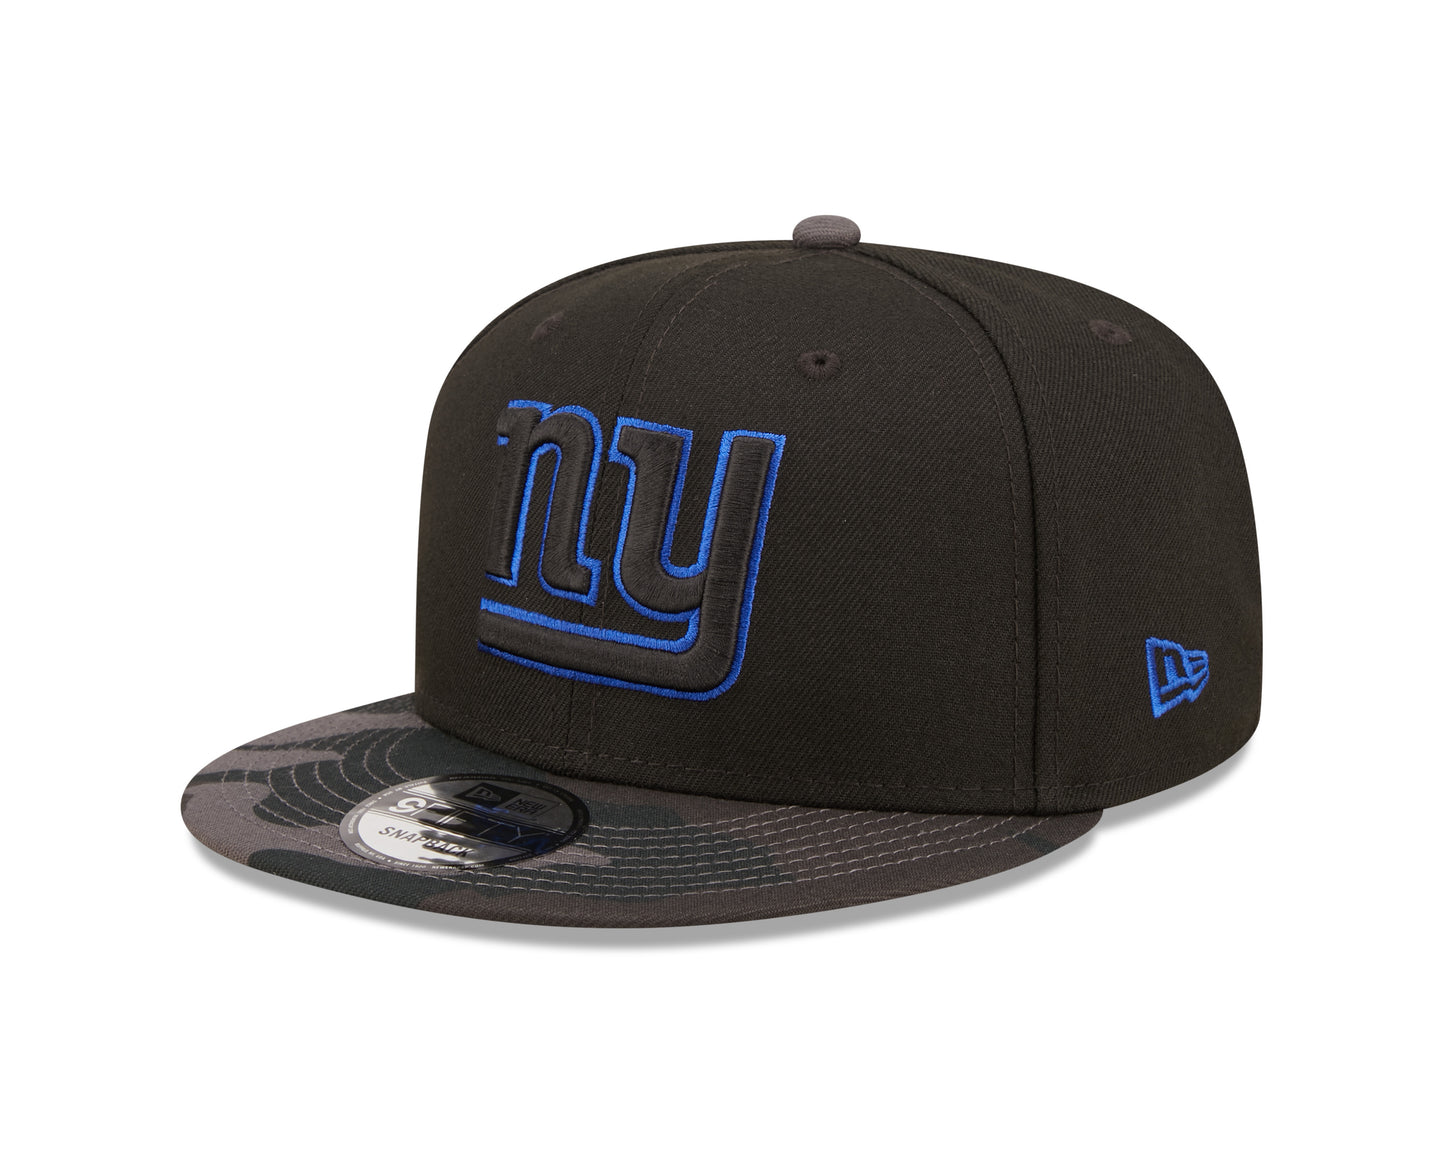 New York Giants NFL New Era Camo Vize 9FIFTY Snapback Hat - Black